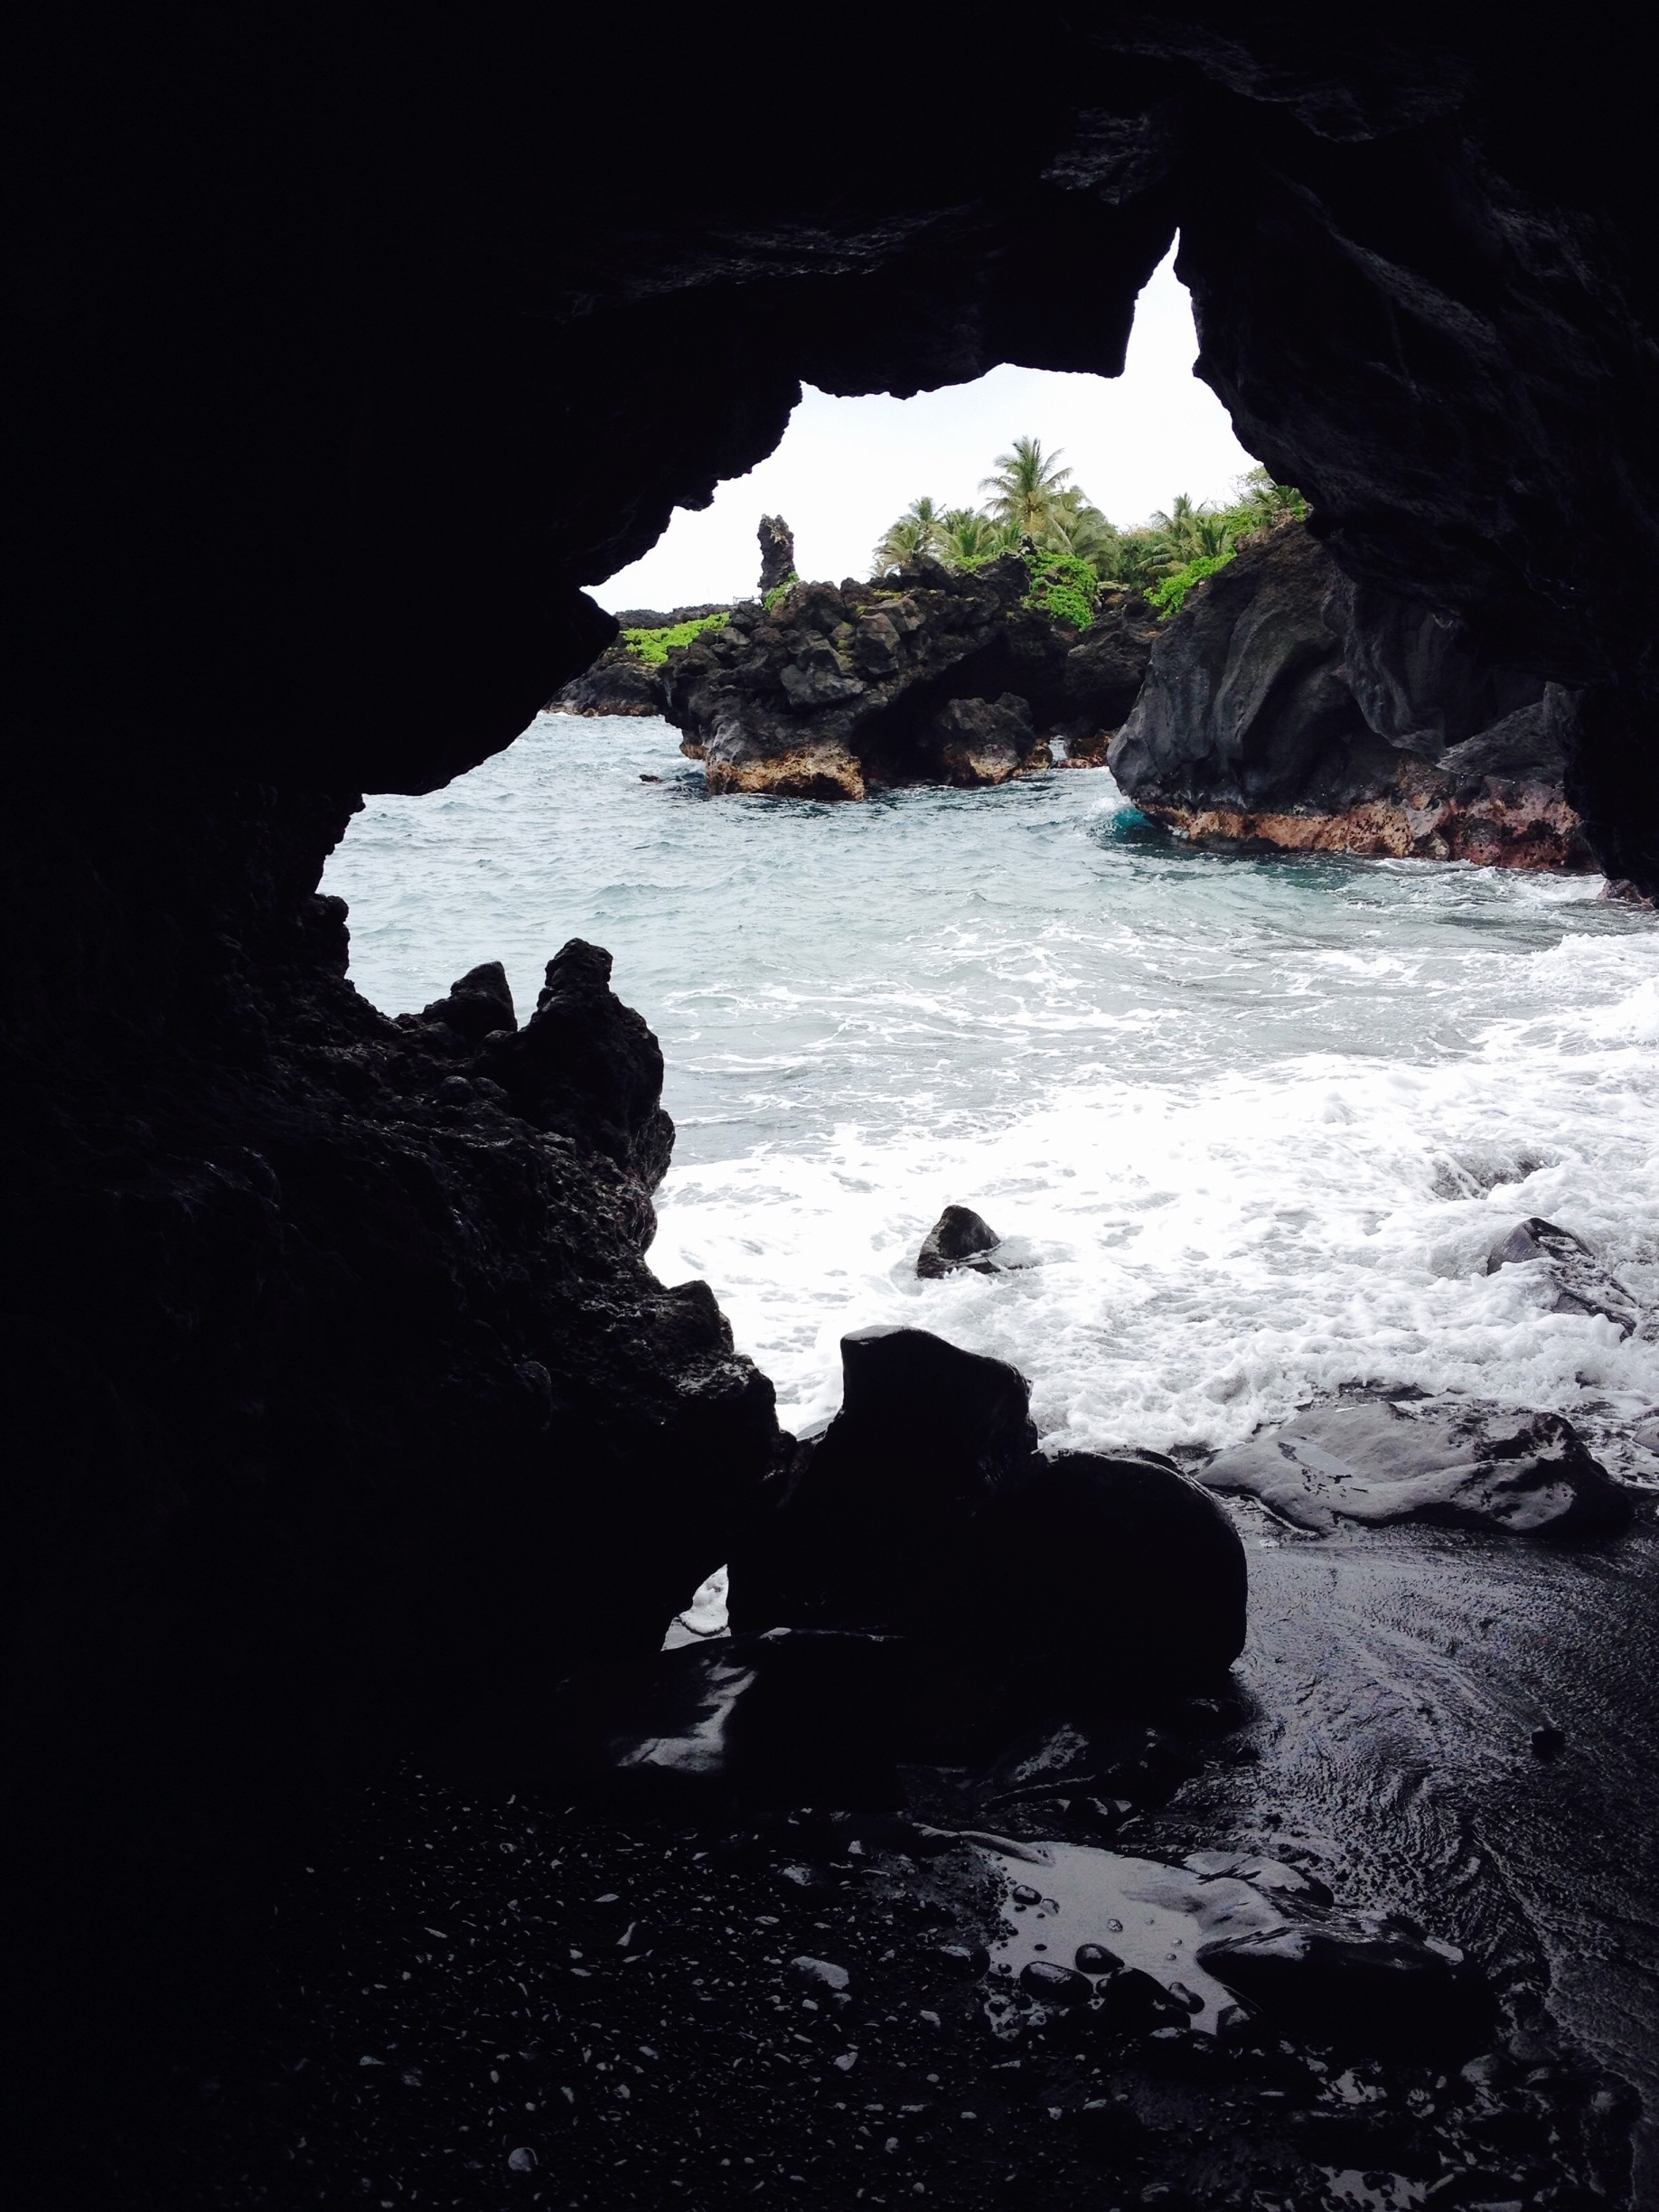 hapuna beach cave